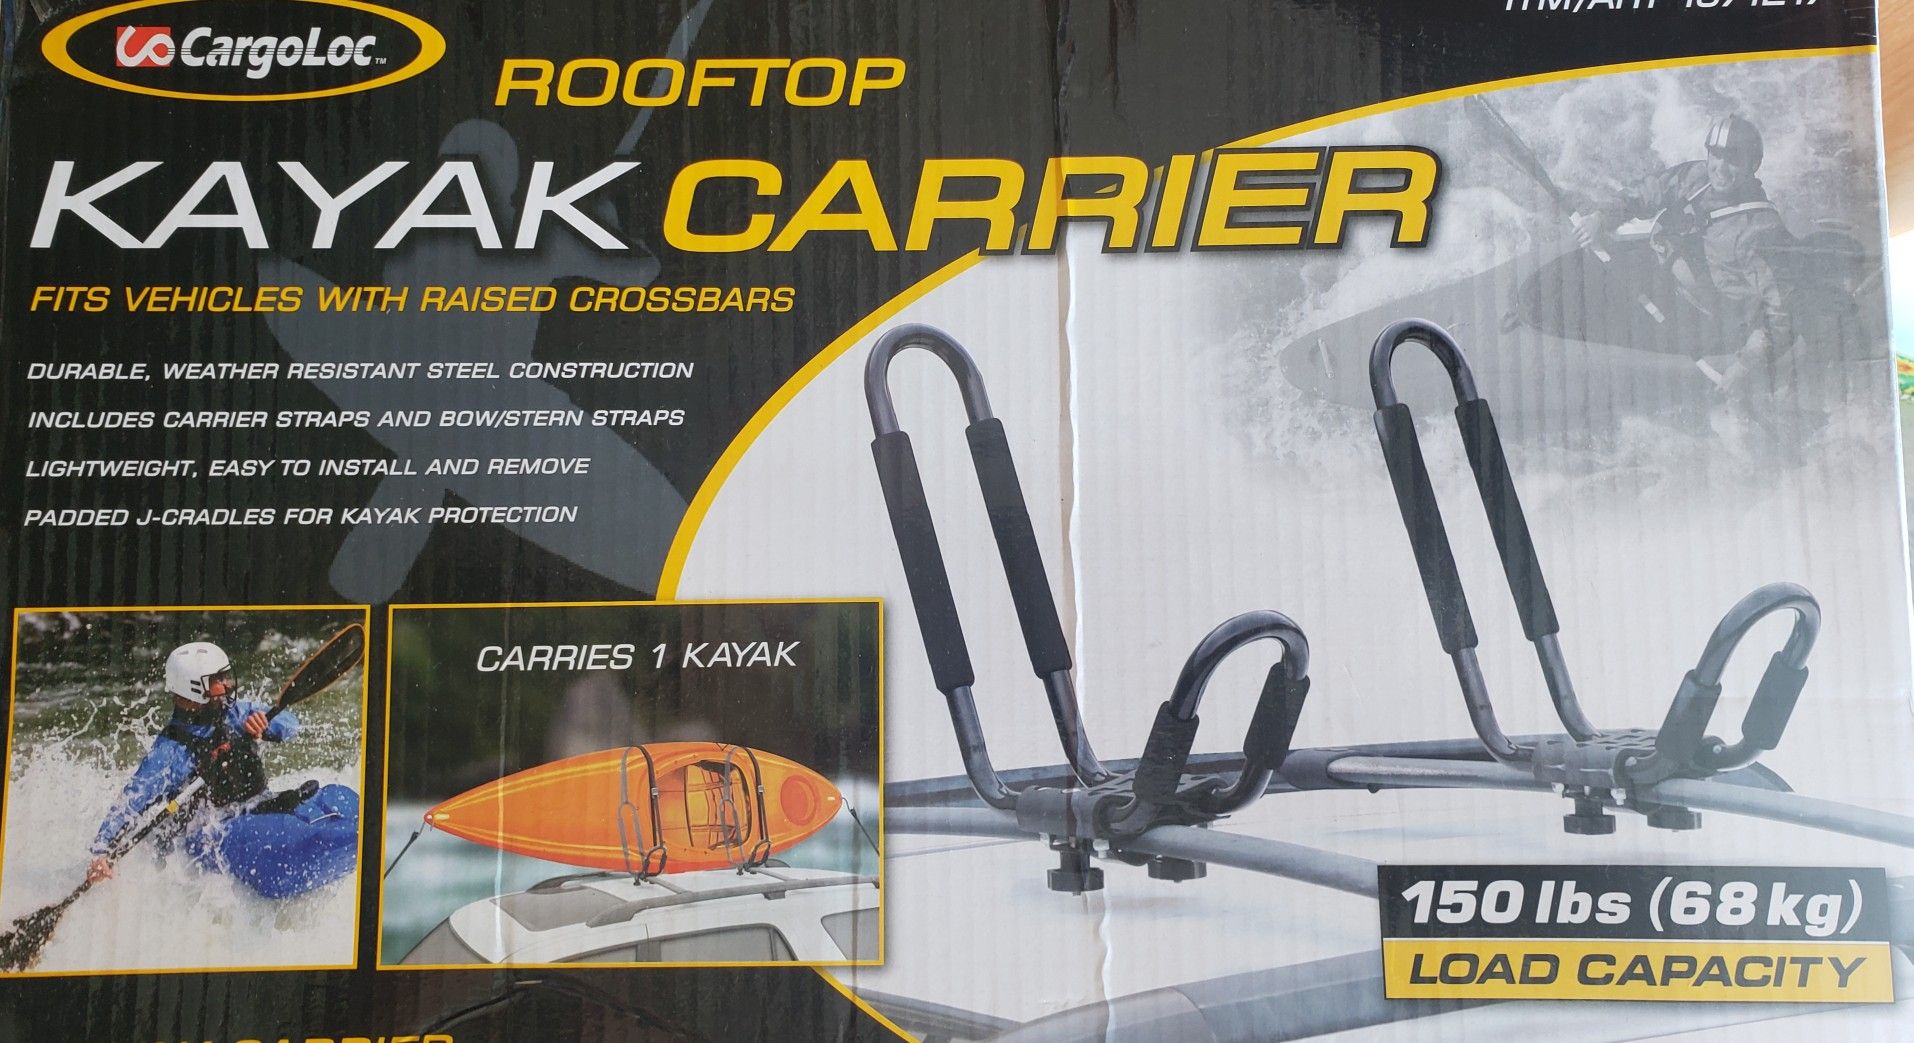 CargoLoc Roof Top Kayak Carrier